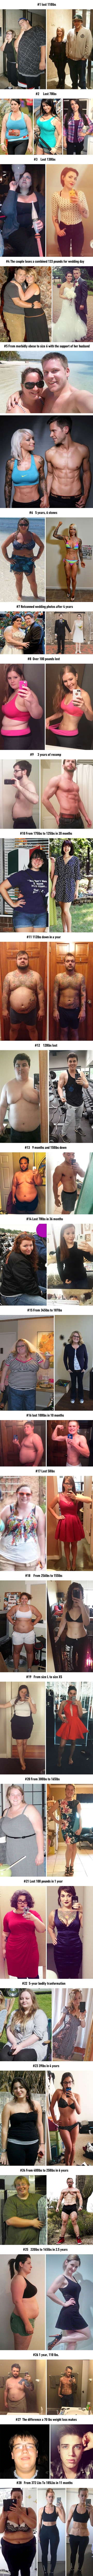 Dramatic weight loss photos